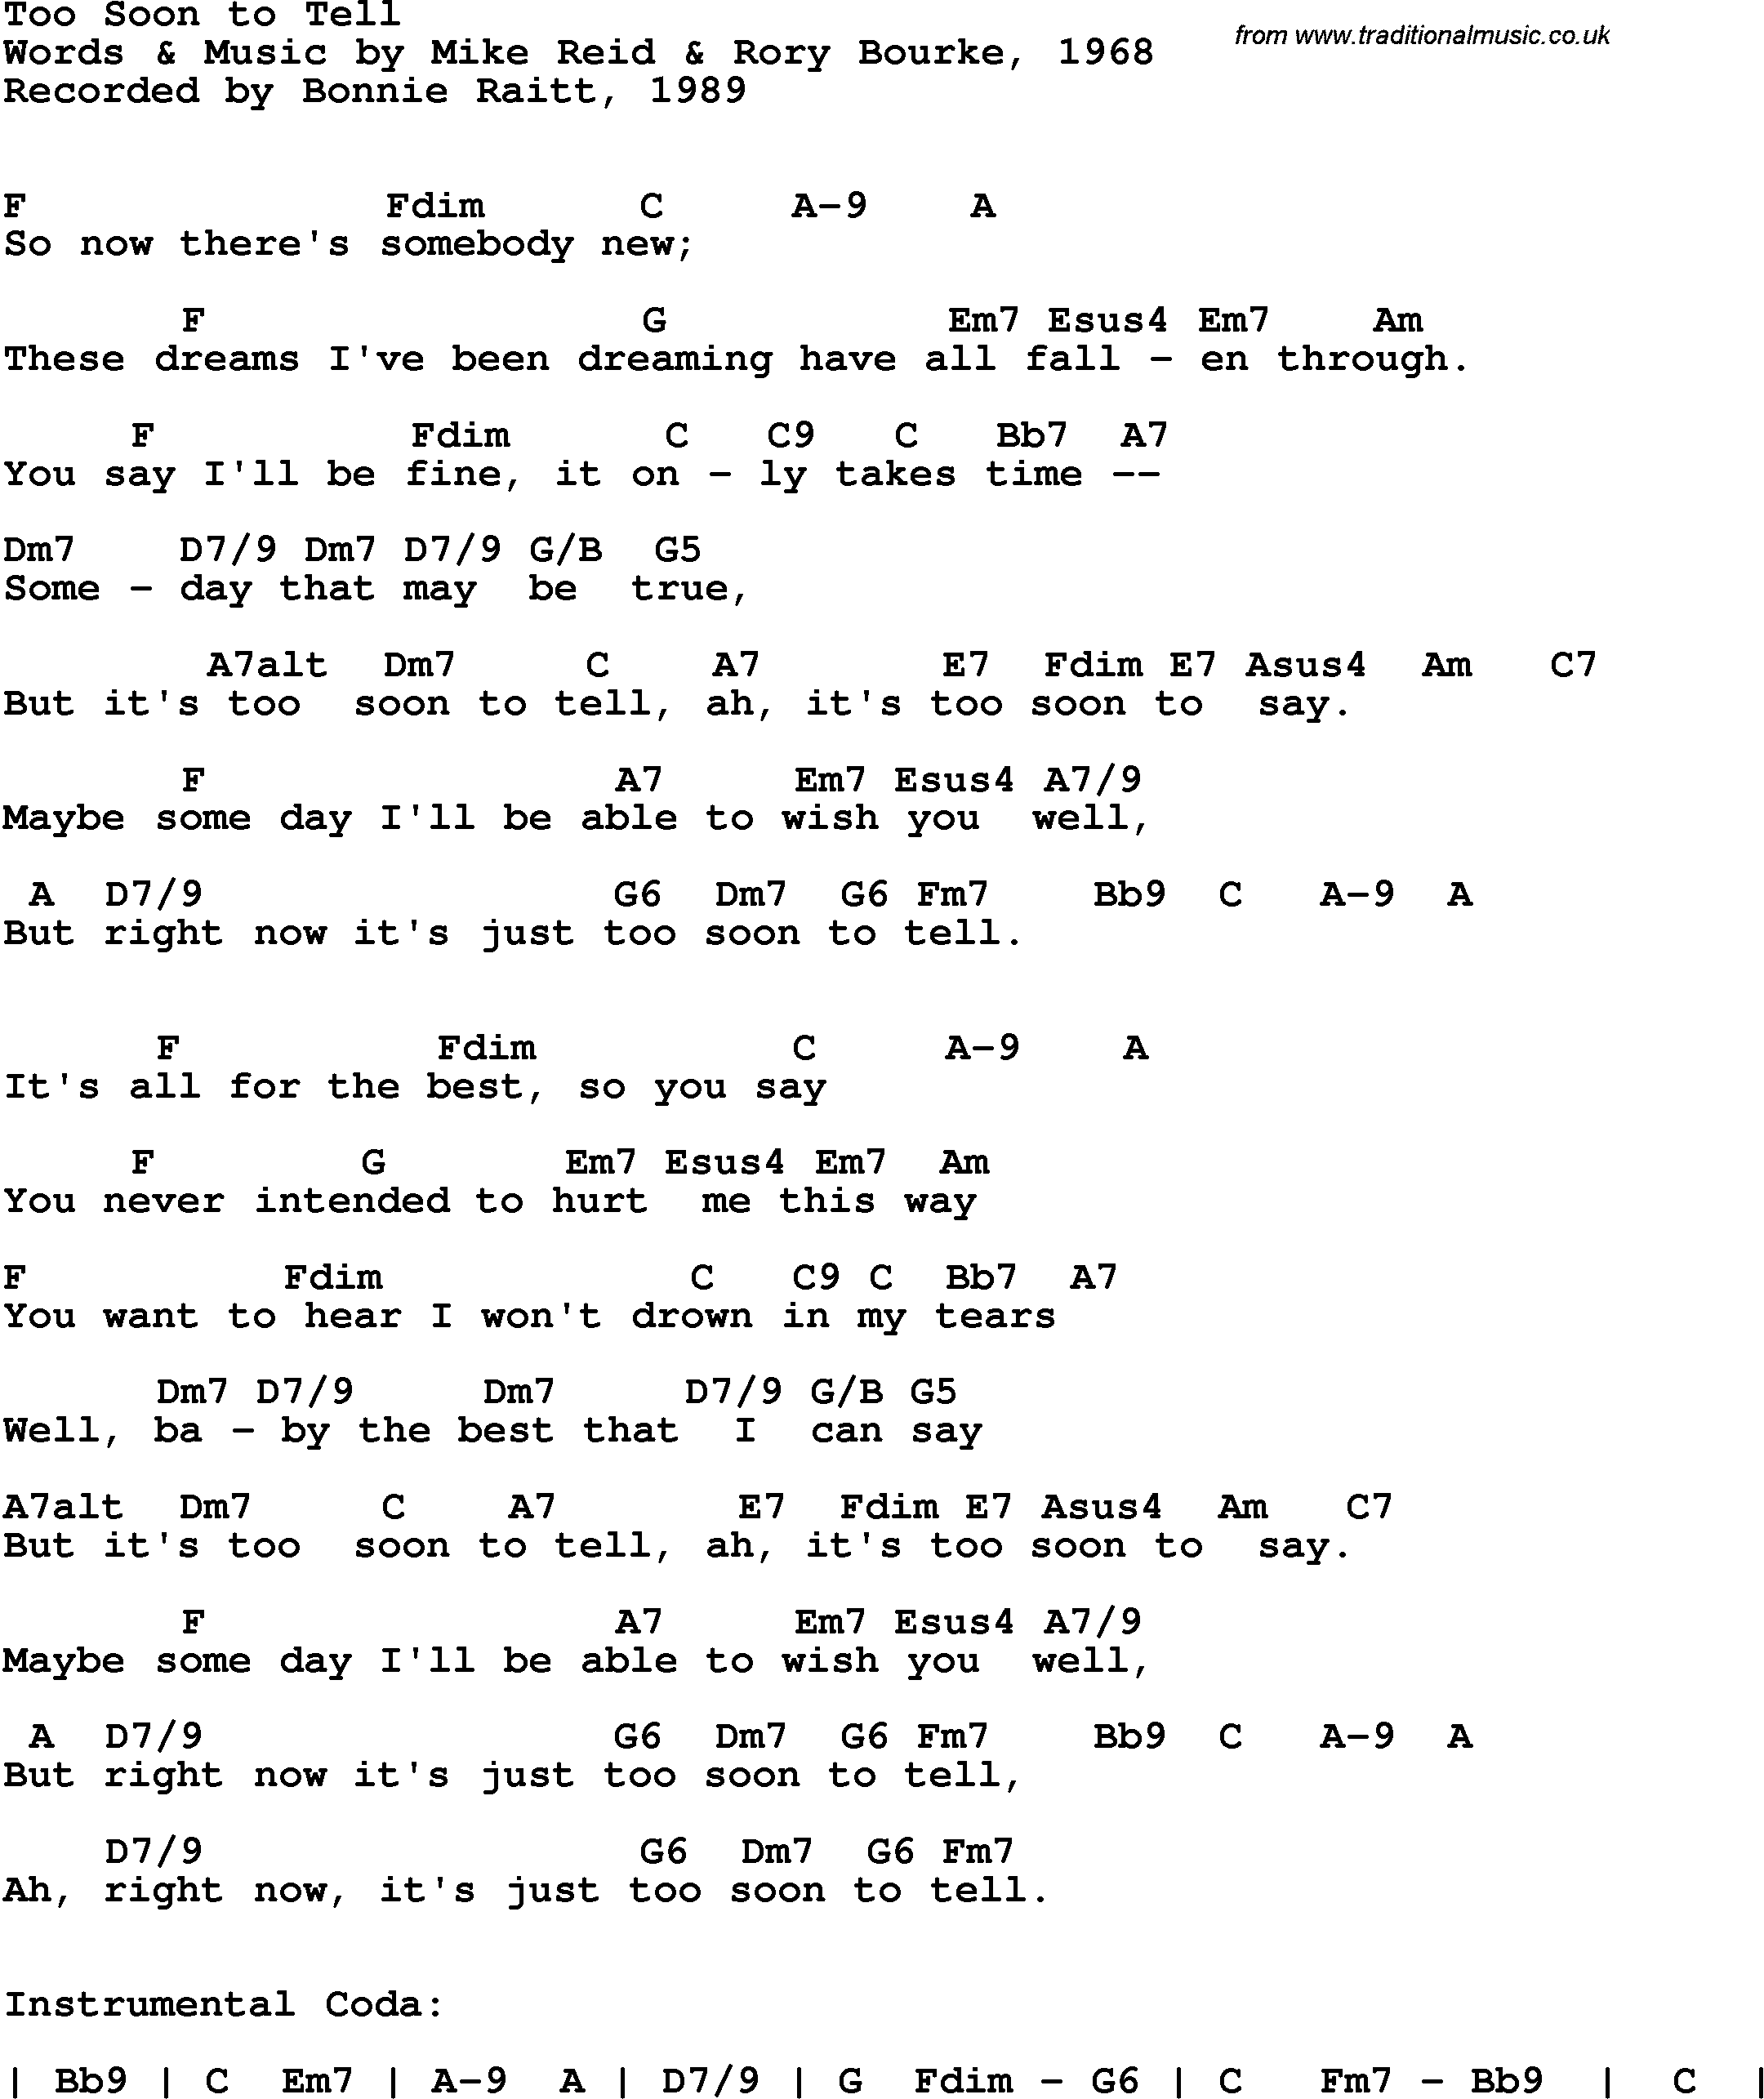 Song Lyrics with guitar chords for Too Soon To Tell -  Bonnie Raitt, 1989